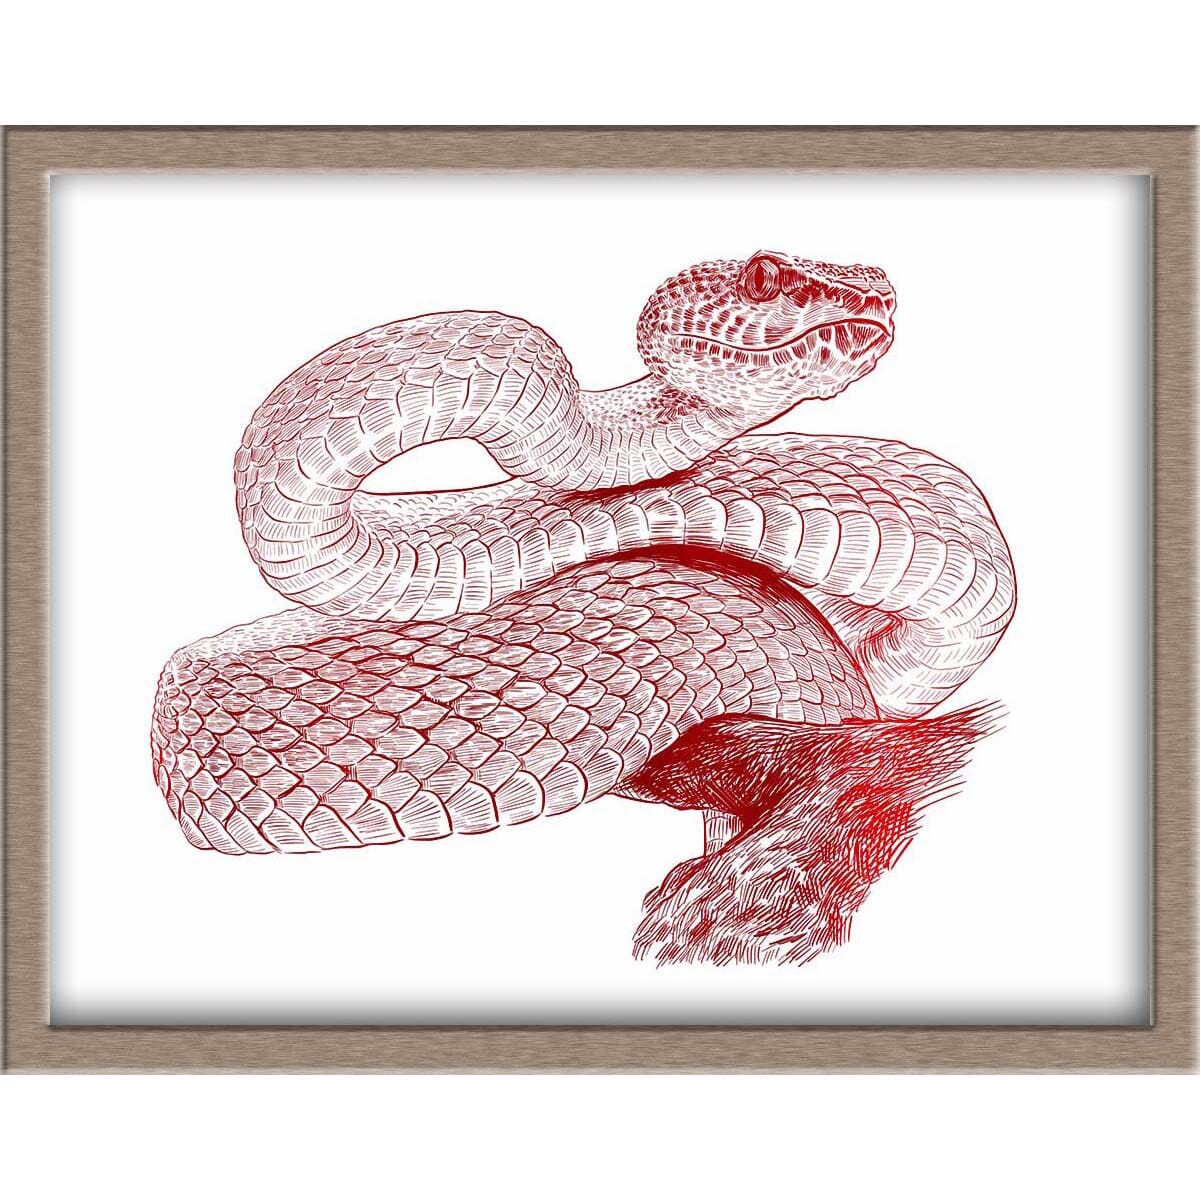 Snake Foiled Print Posters, Prints, & Visual Artwork JoyousJoyfulJoyness 